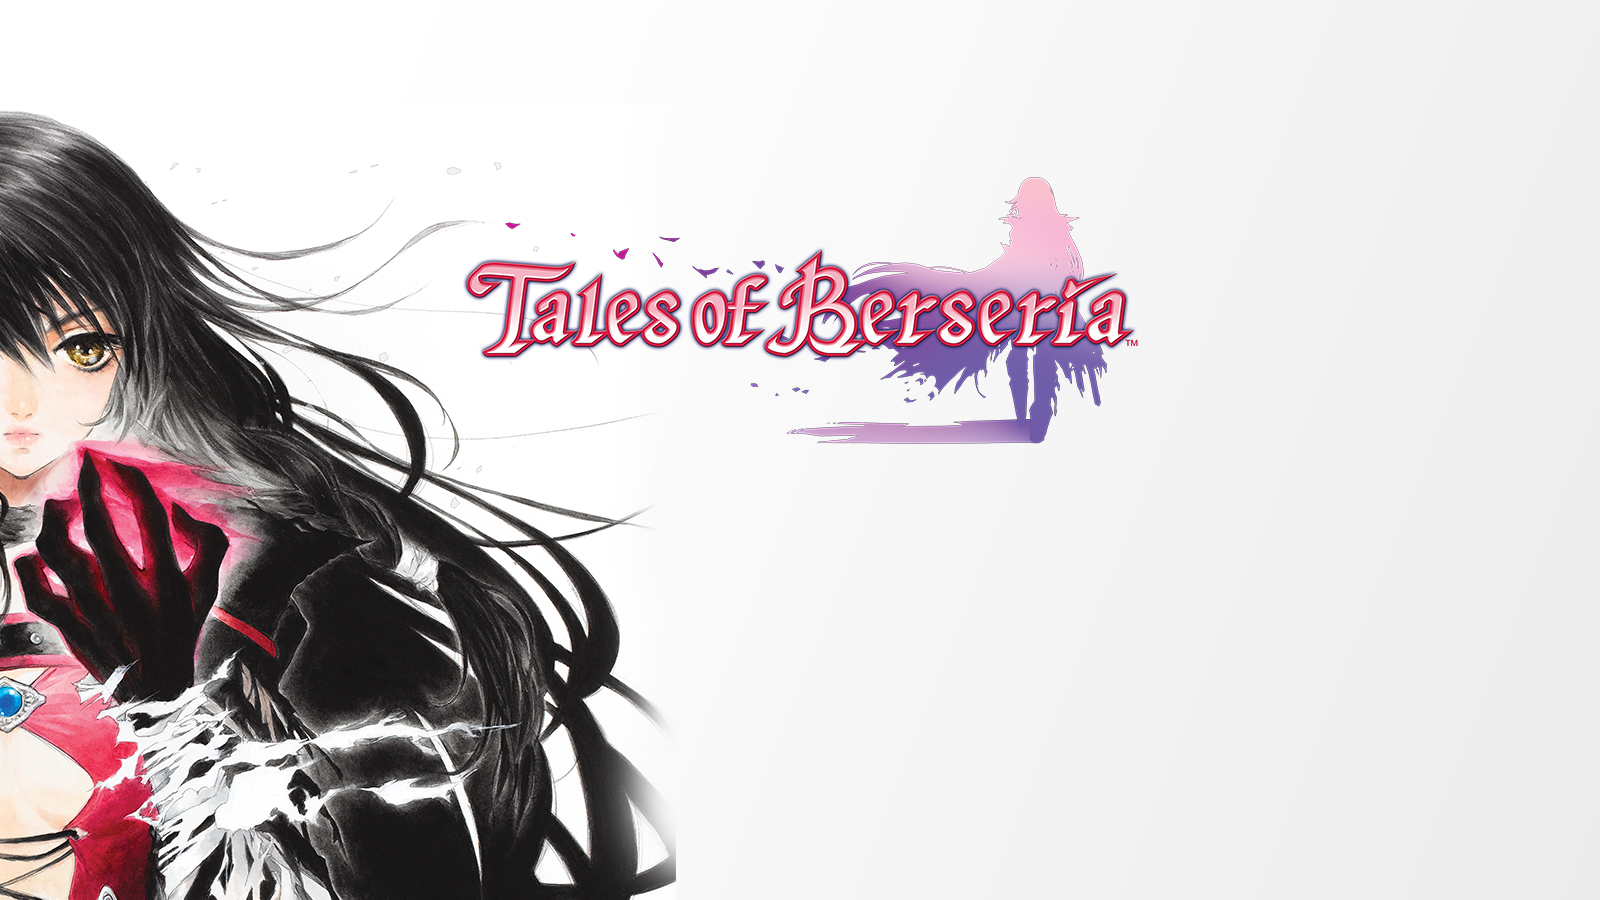 Tales of Berseria logo